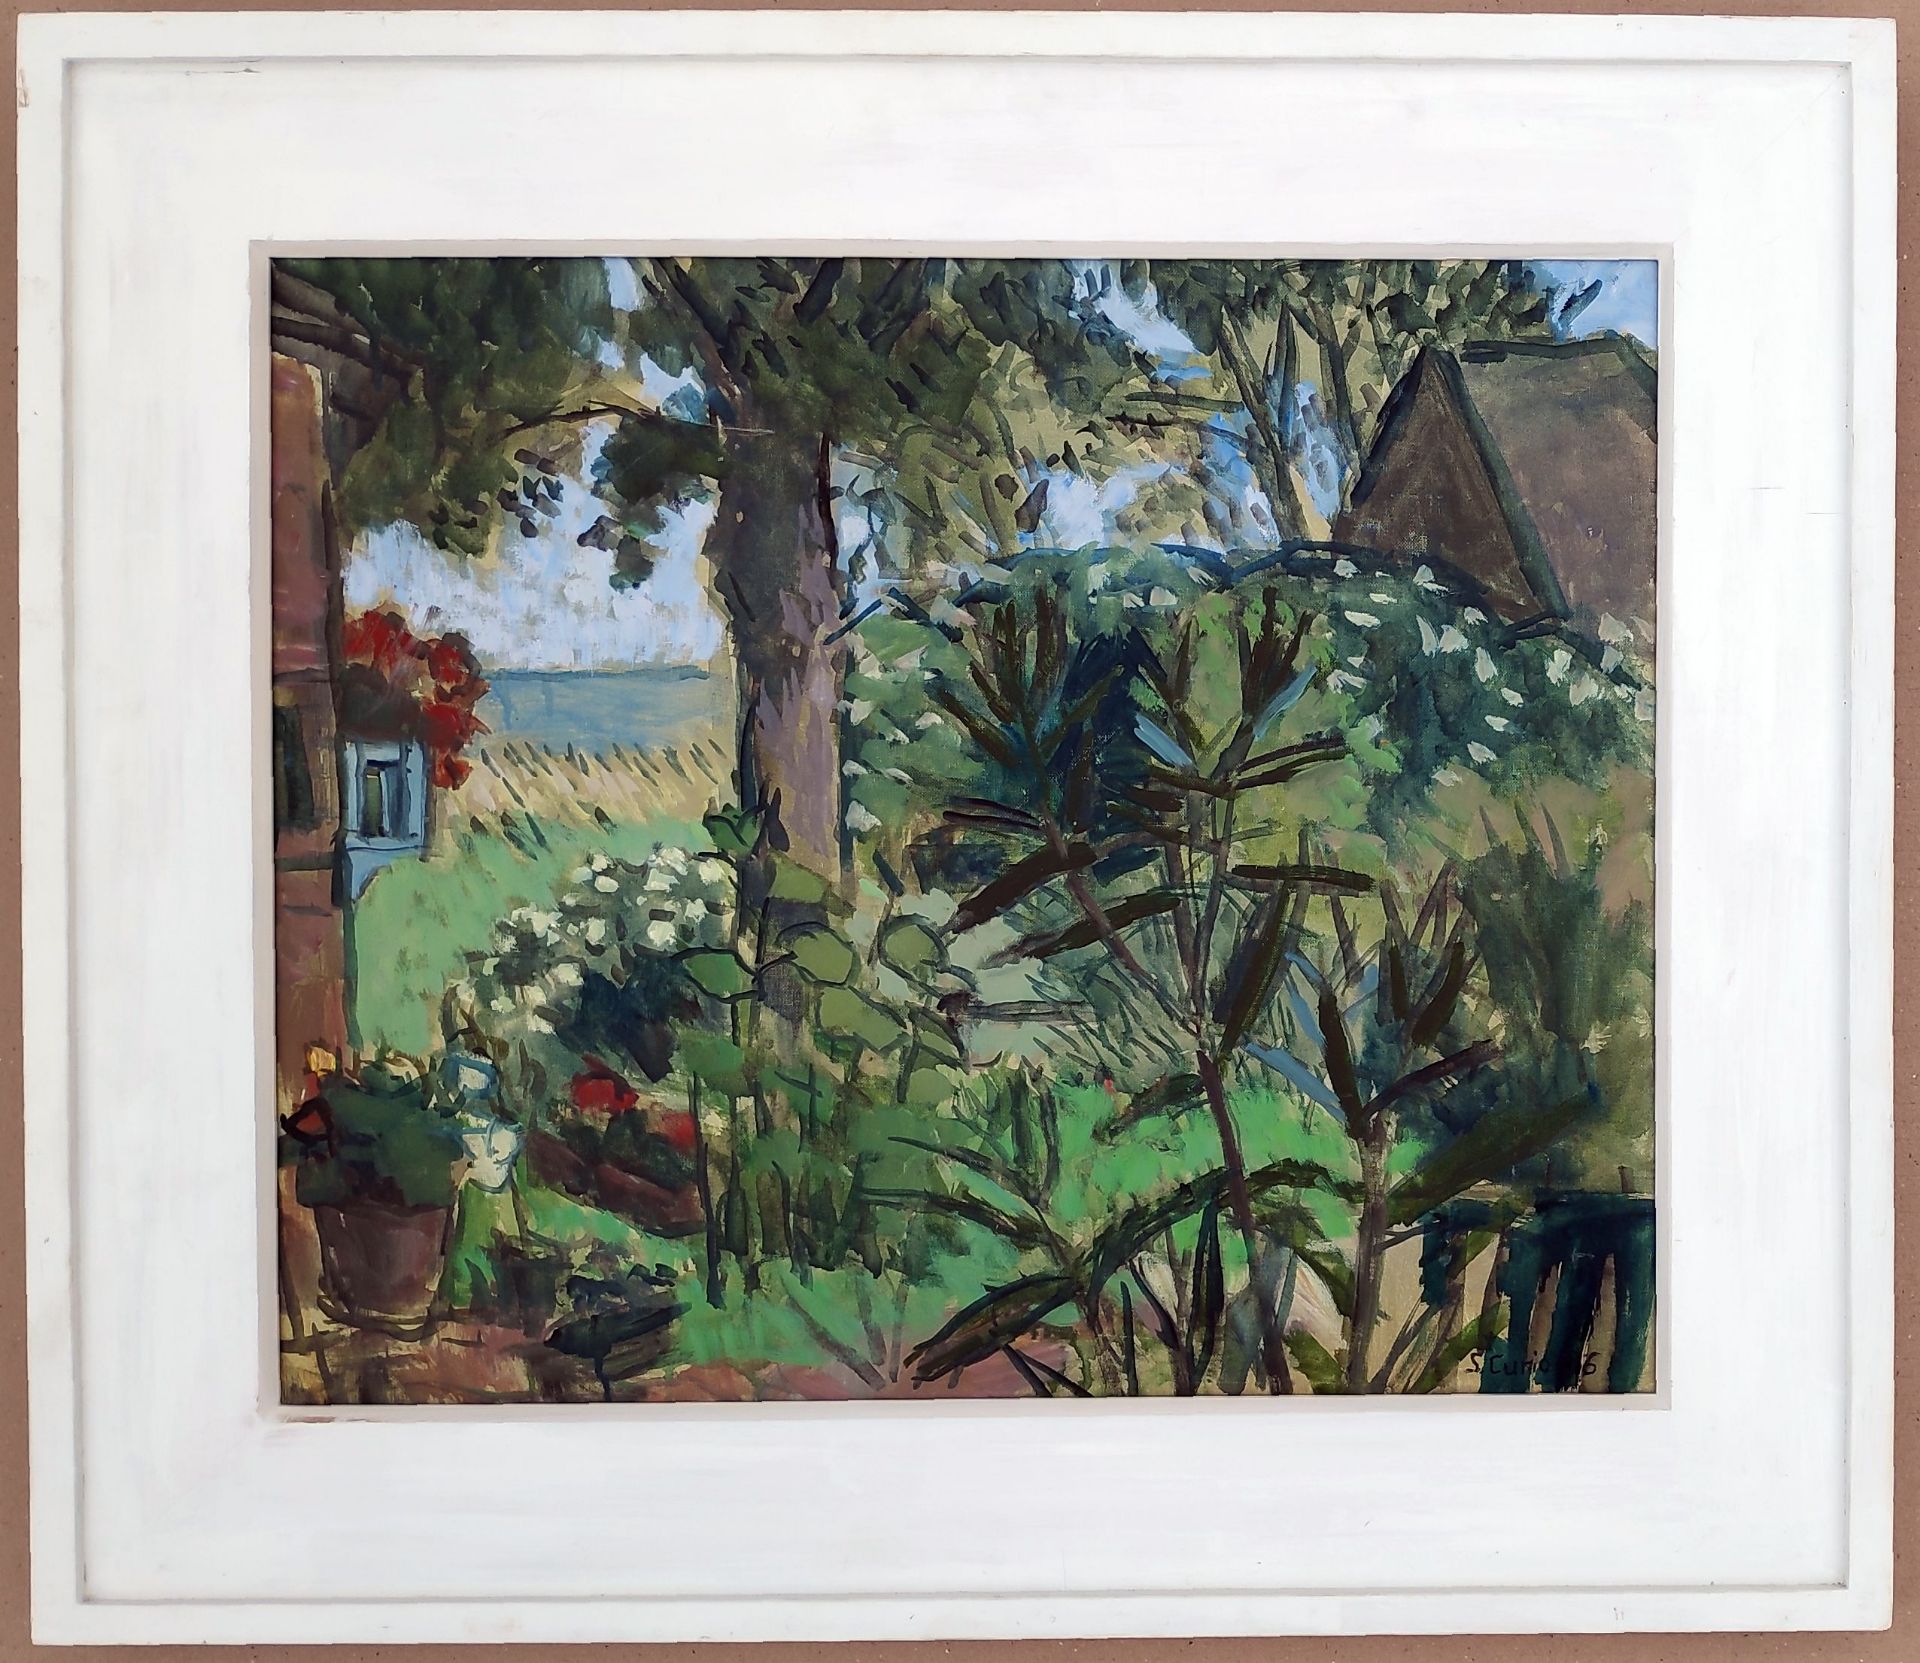 Curio, Sabine (1950 Ahlbeck, lebt in Stolpe/Usedom) "Garten im Sommer" - Image 2 of 3